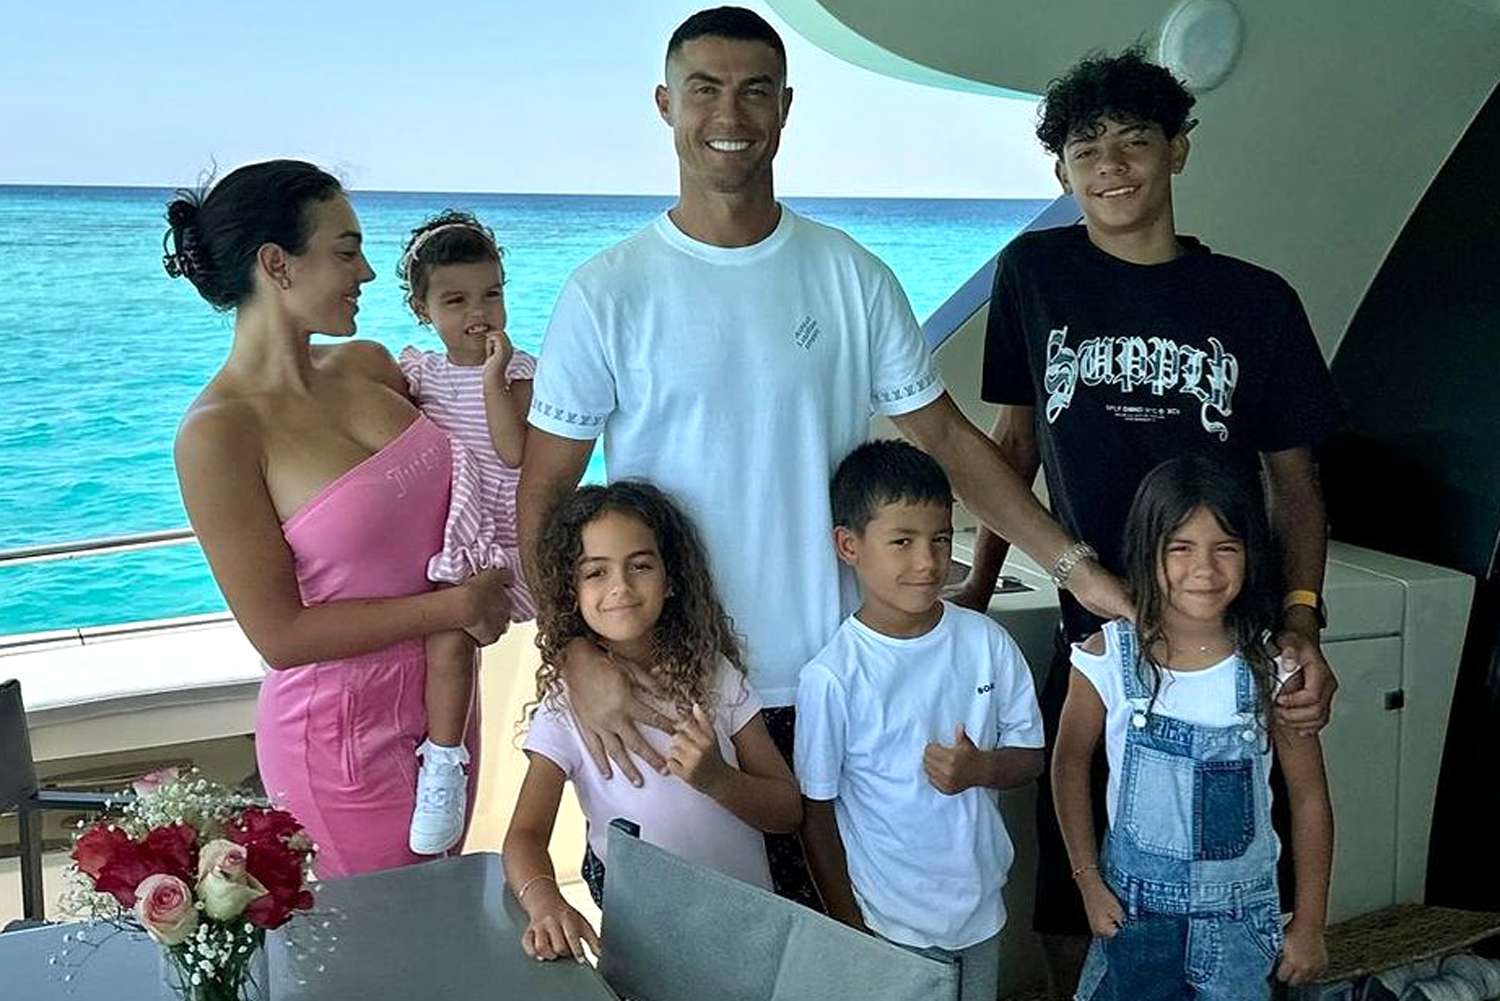 Cristiano Ronaldo Shares Sweet Family Vacation Photo with Partner Georgina Rodríguez and 5 Kids: 'My Life'